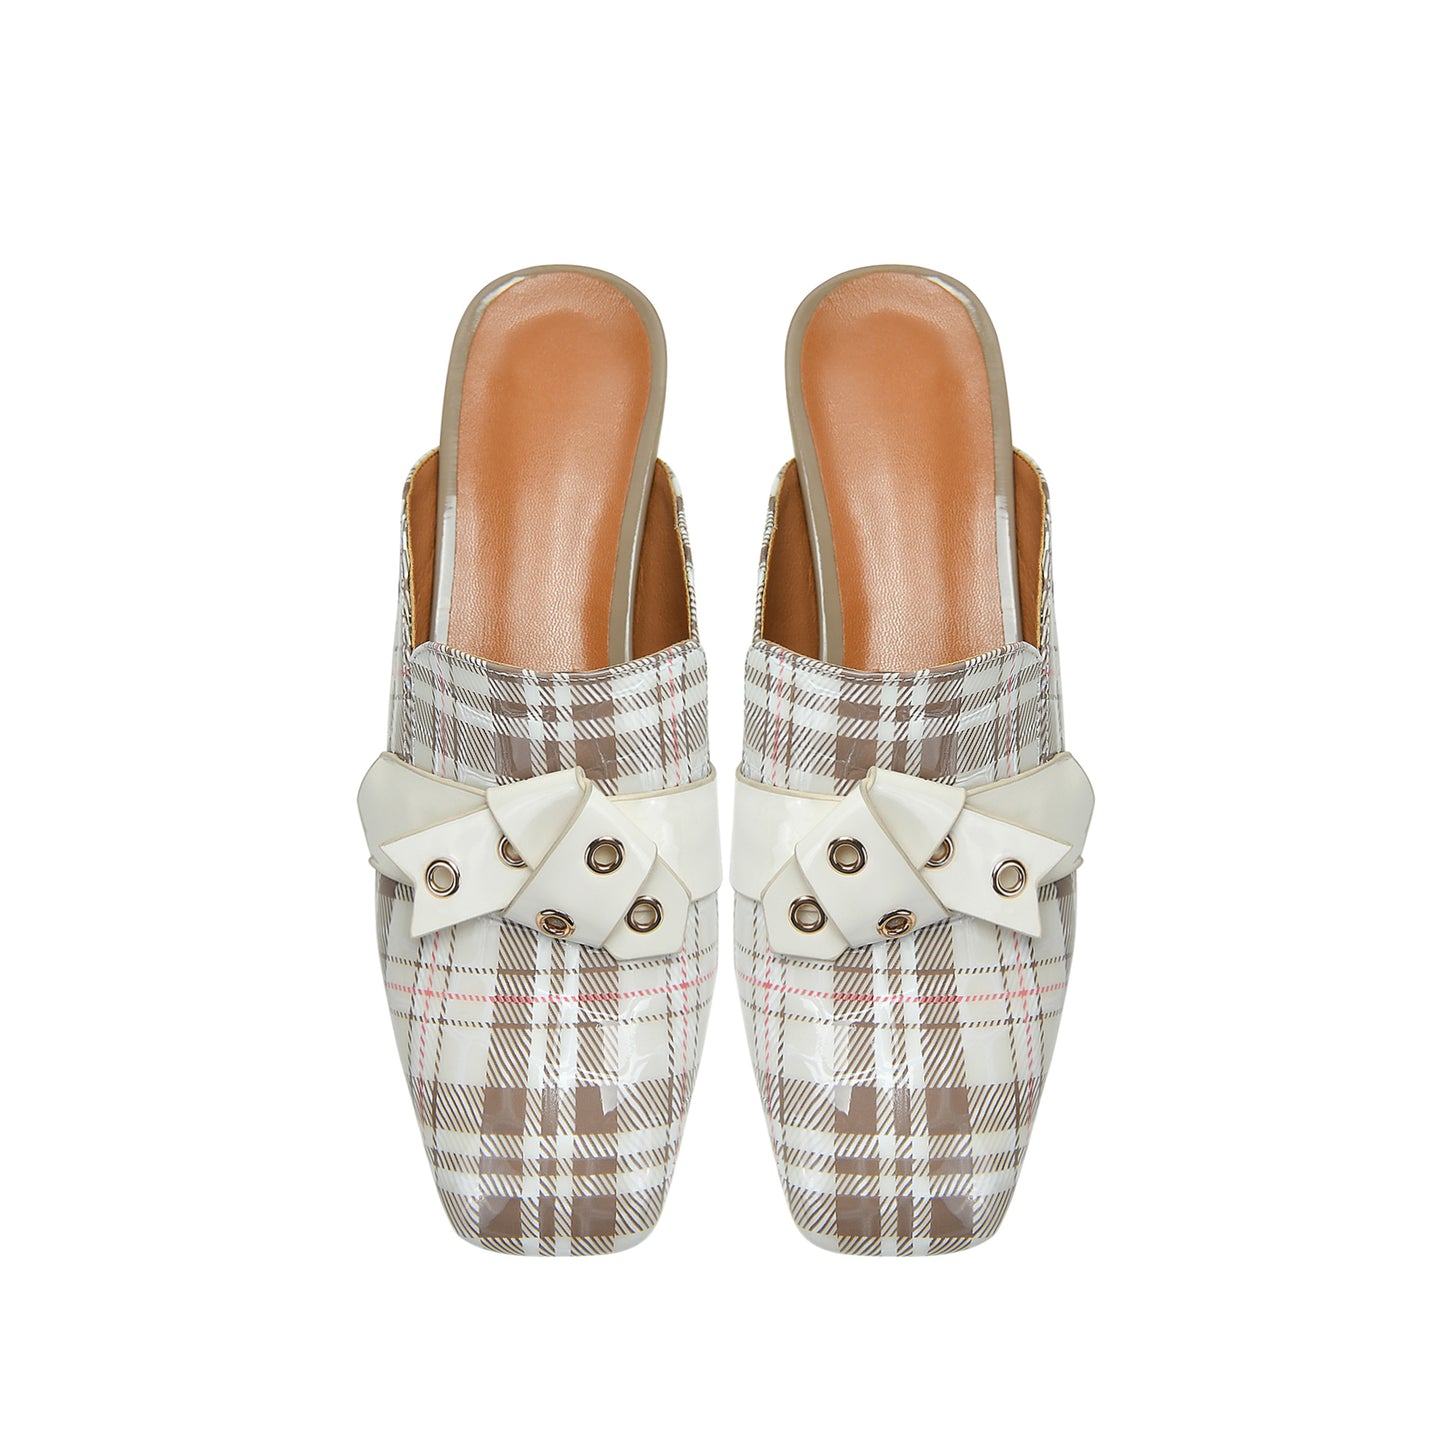 TinaCus Women's Square Toe Plaid Genuine Leather Handmade Buckle Decor Stylish Low Heel Sandal Slippers